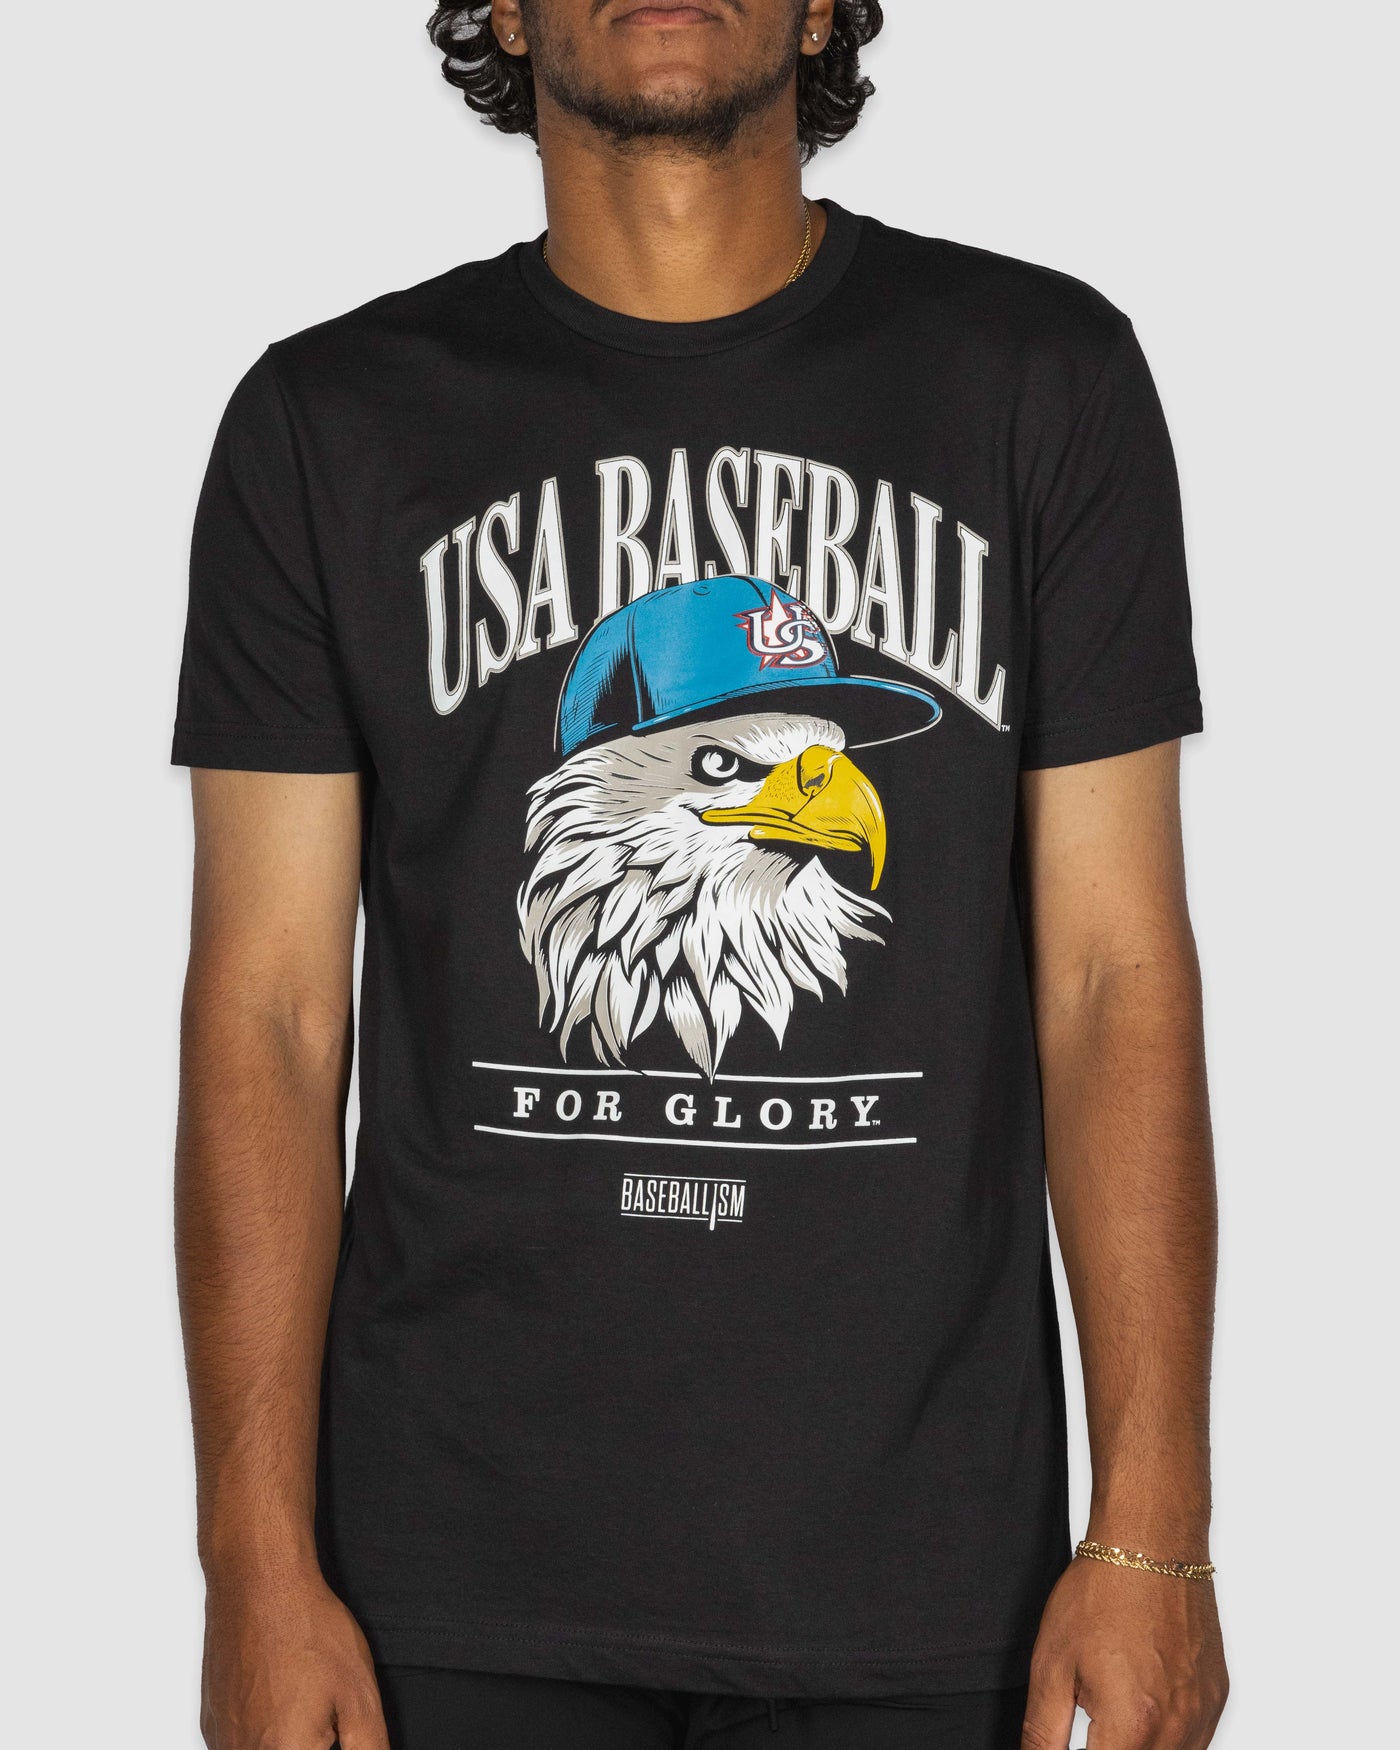 USA Baseball Freedom Eagle - Baseballism x USA Baseball